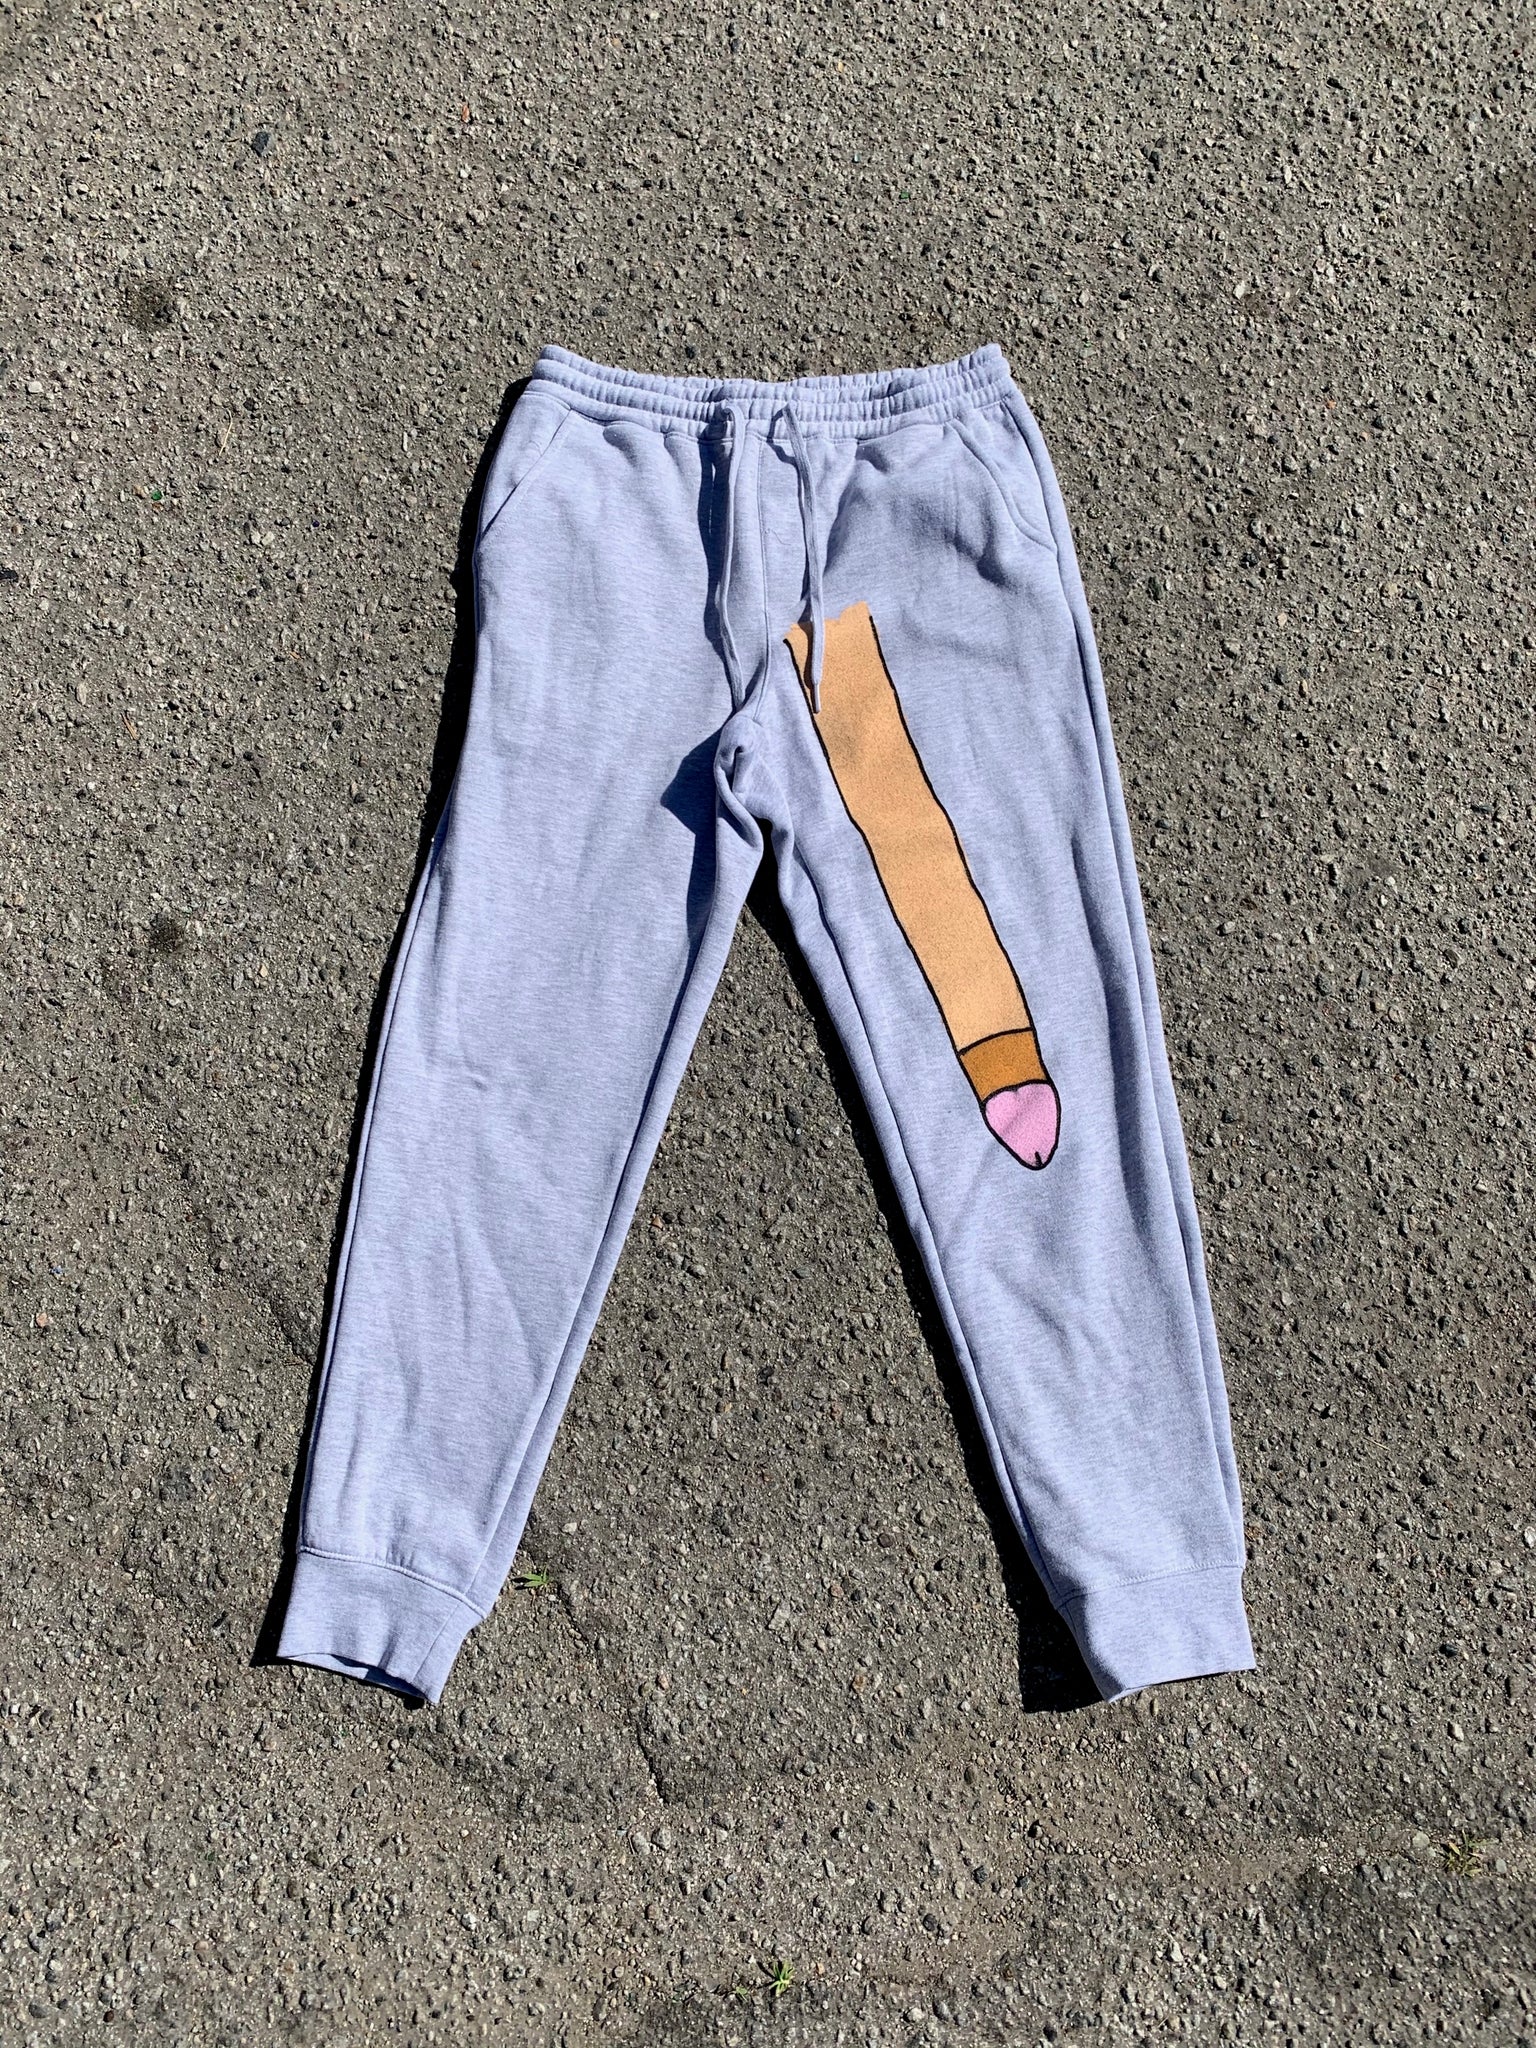 Long Dong Sweatpants (Grey) – POROUS WALKER